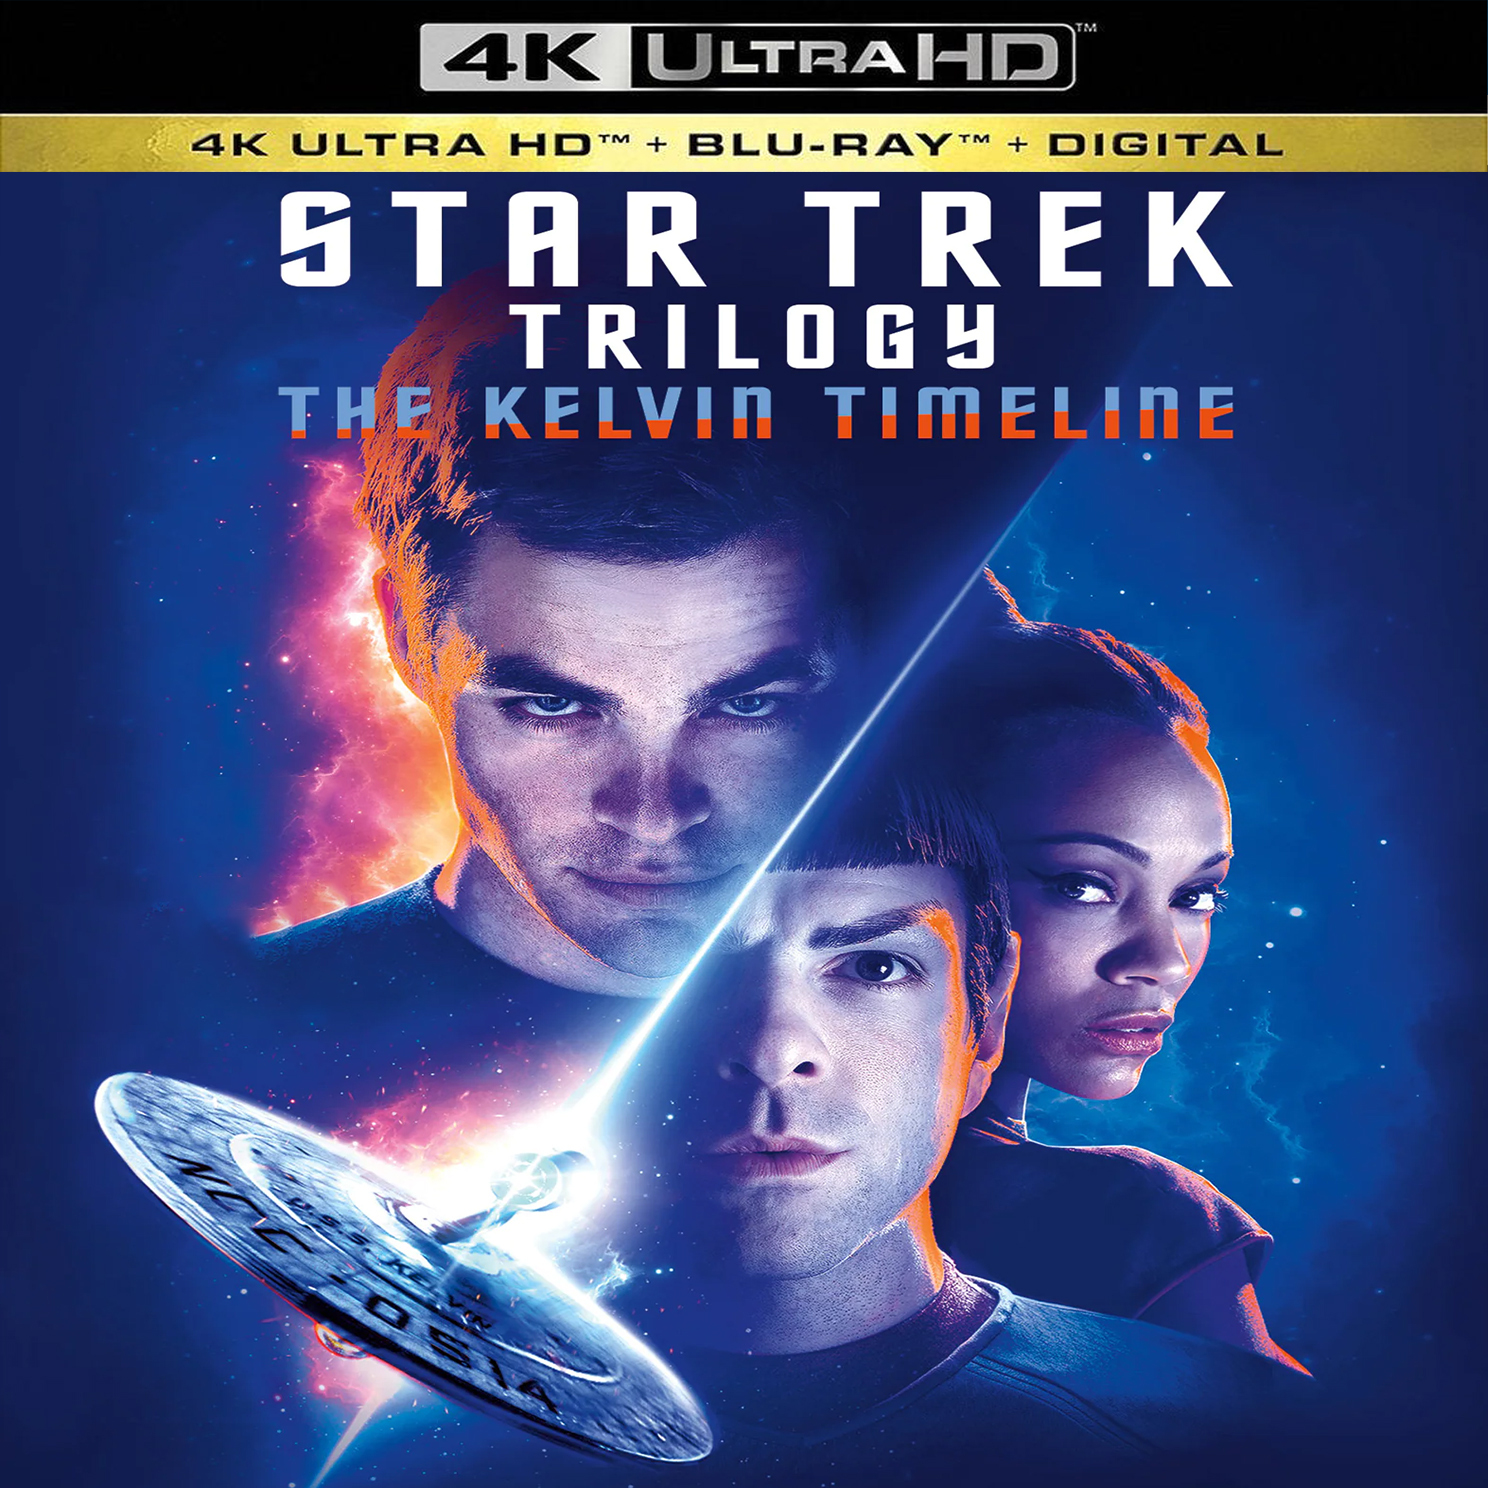 star trek trilogy movies